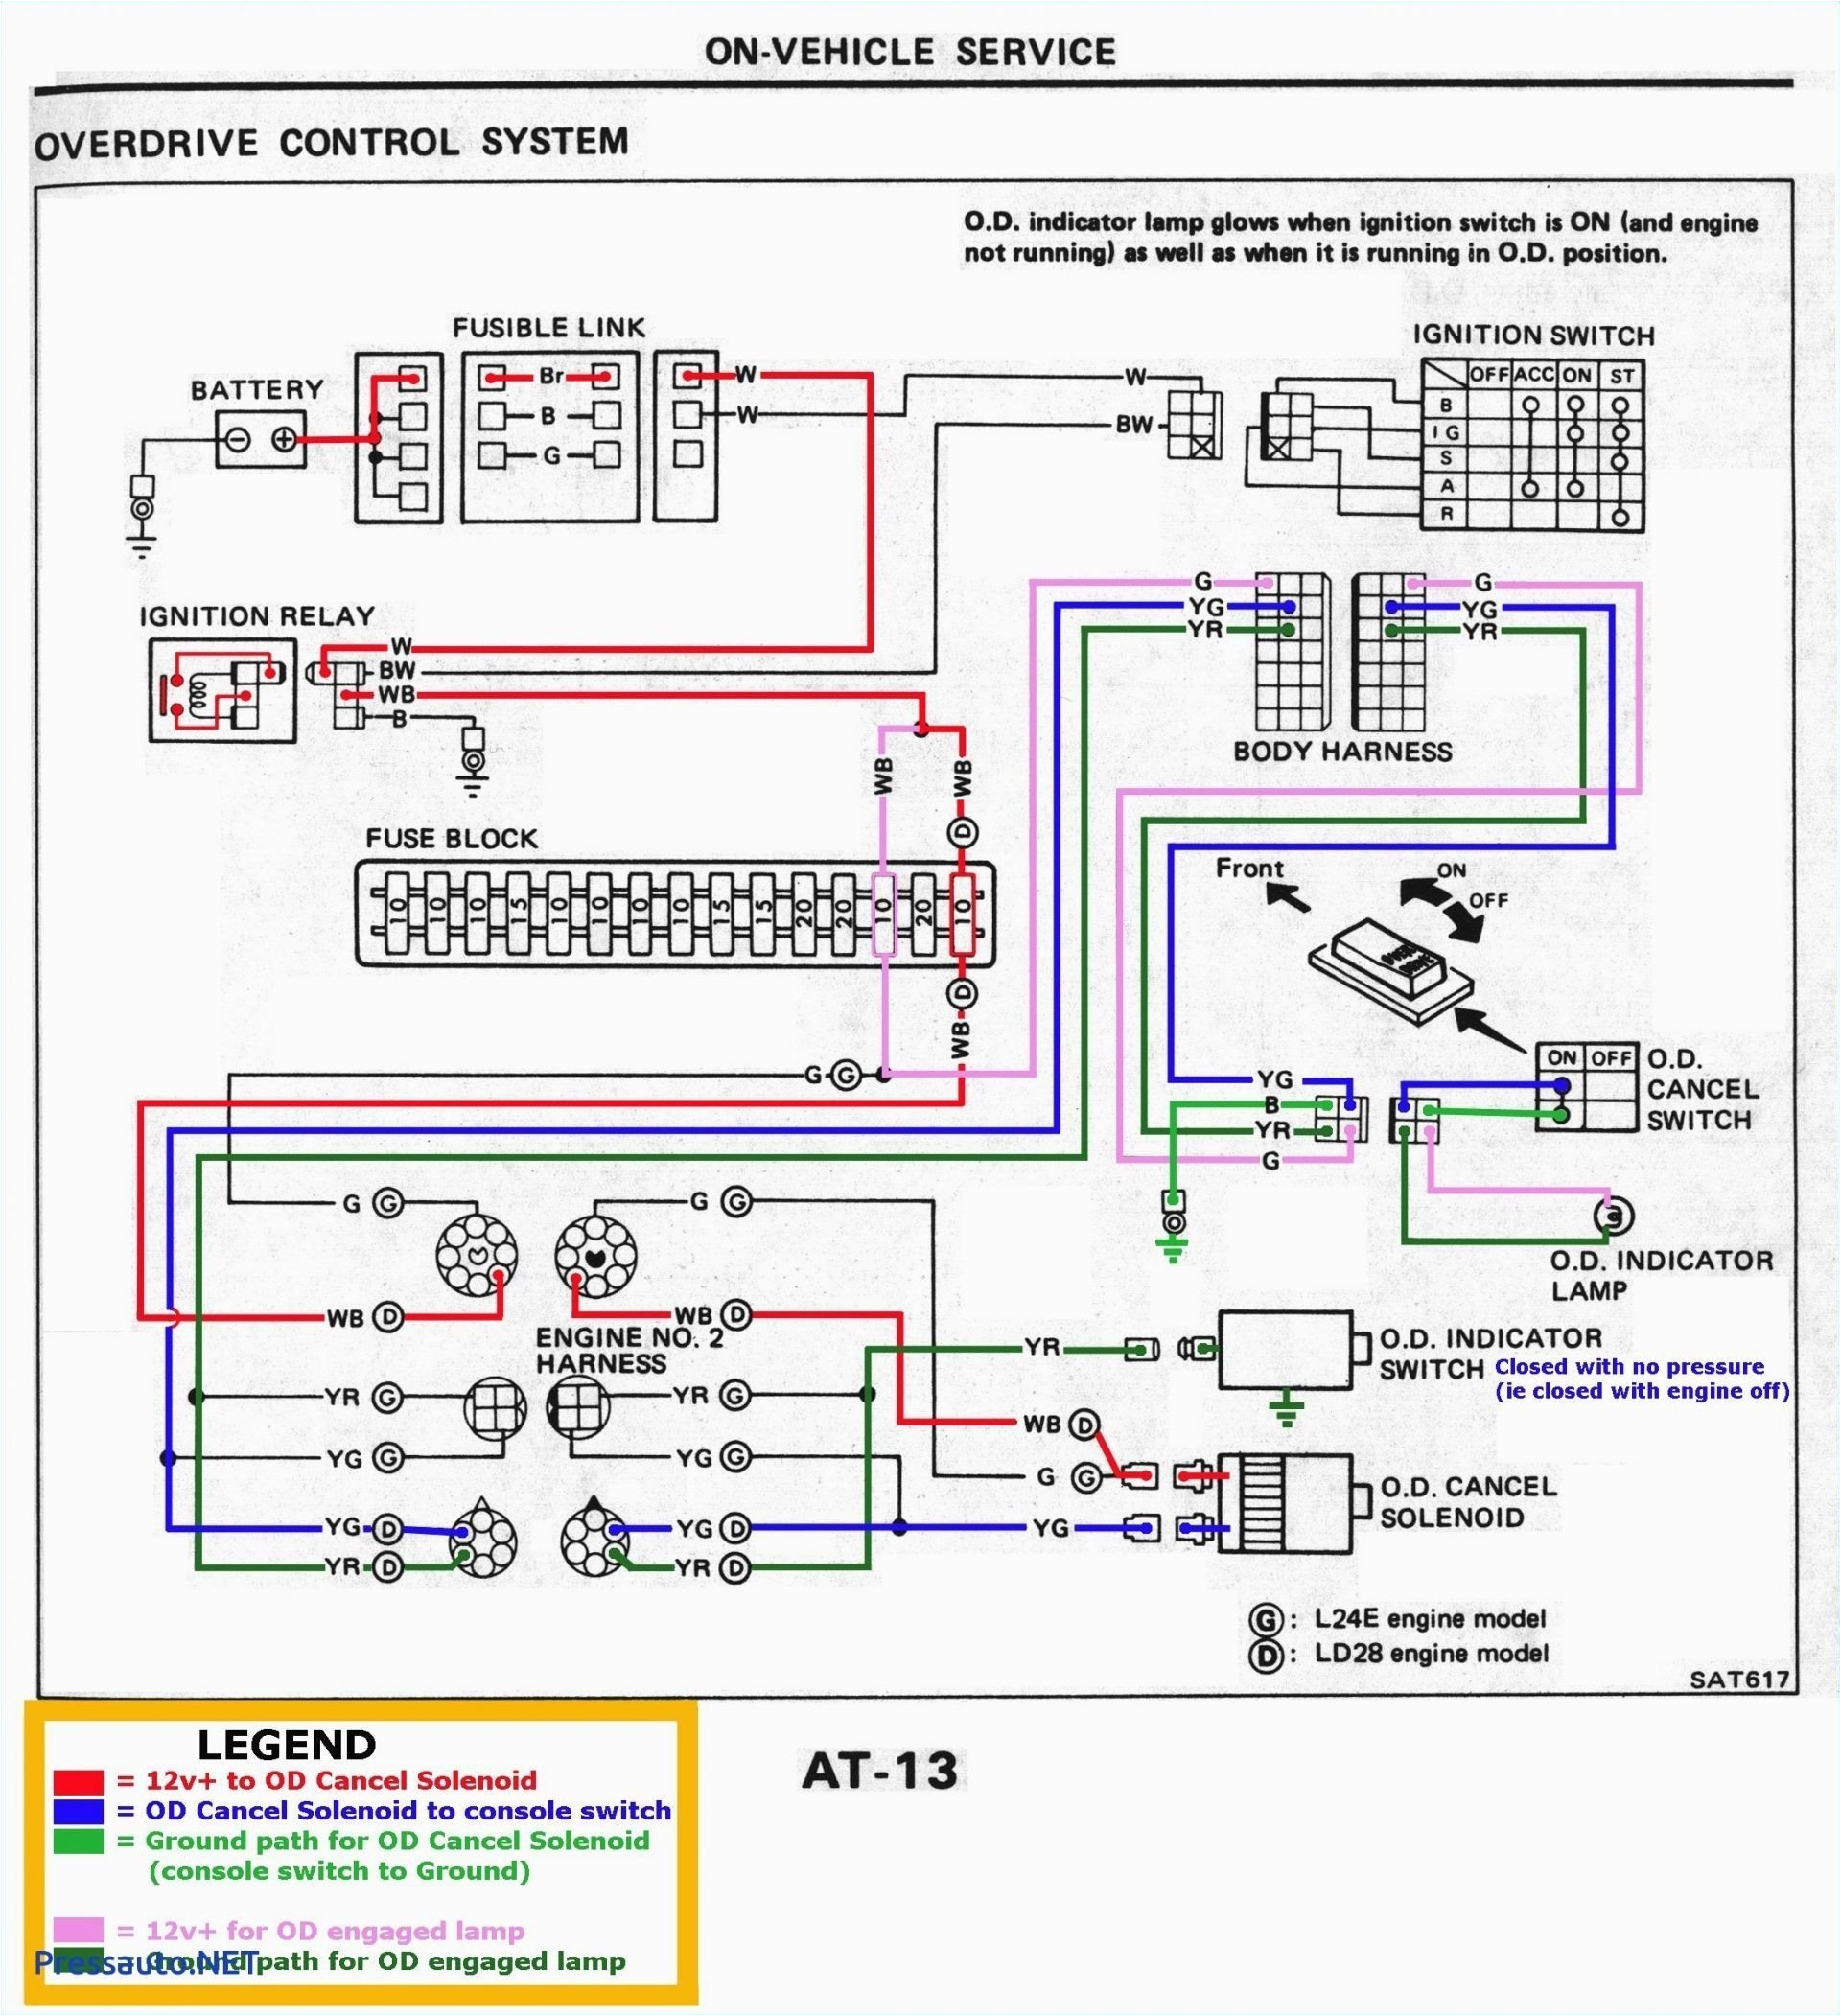 wiring diagram computer wiring diagram paperc11 pc wiring diagram wiring diagram datasource wiring diagram computer fan